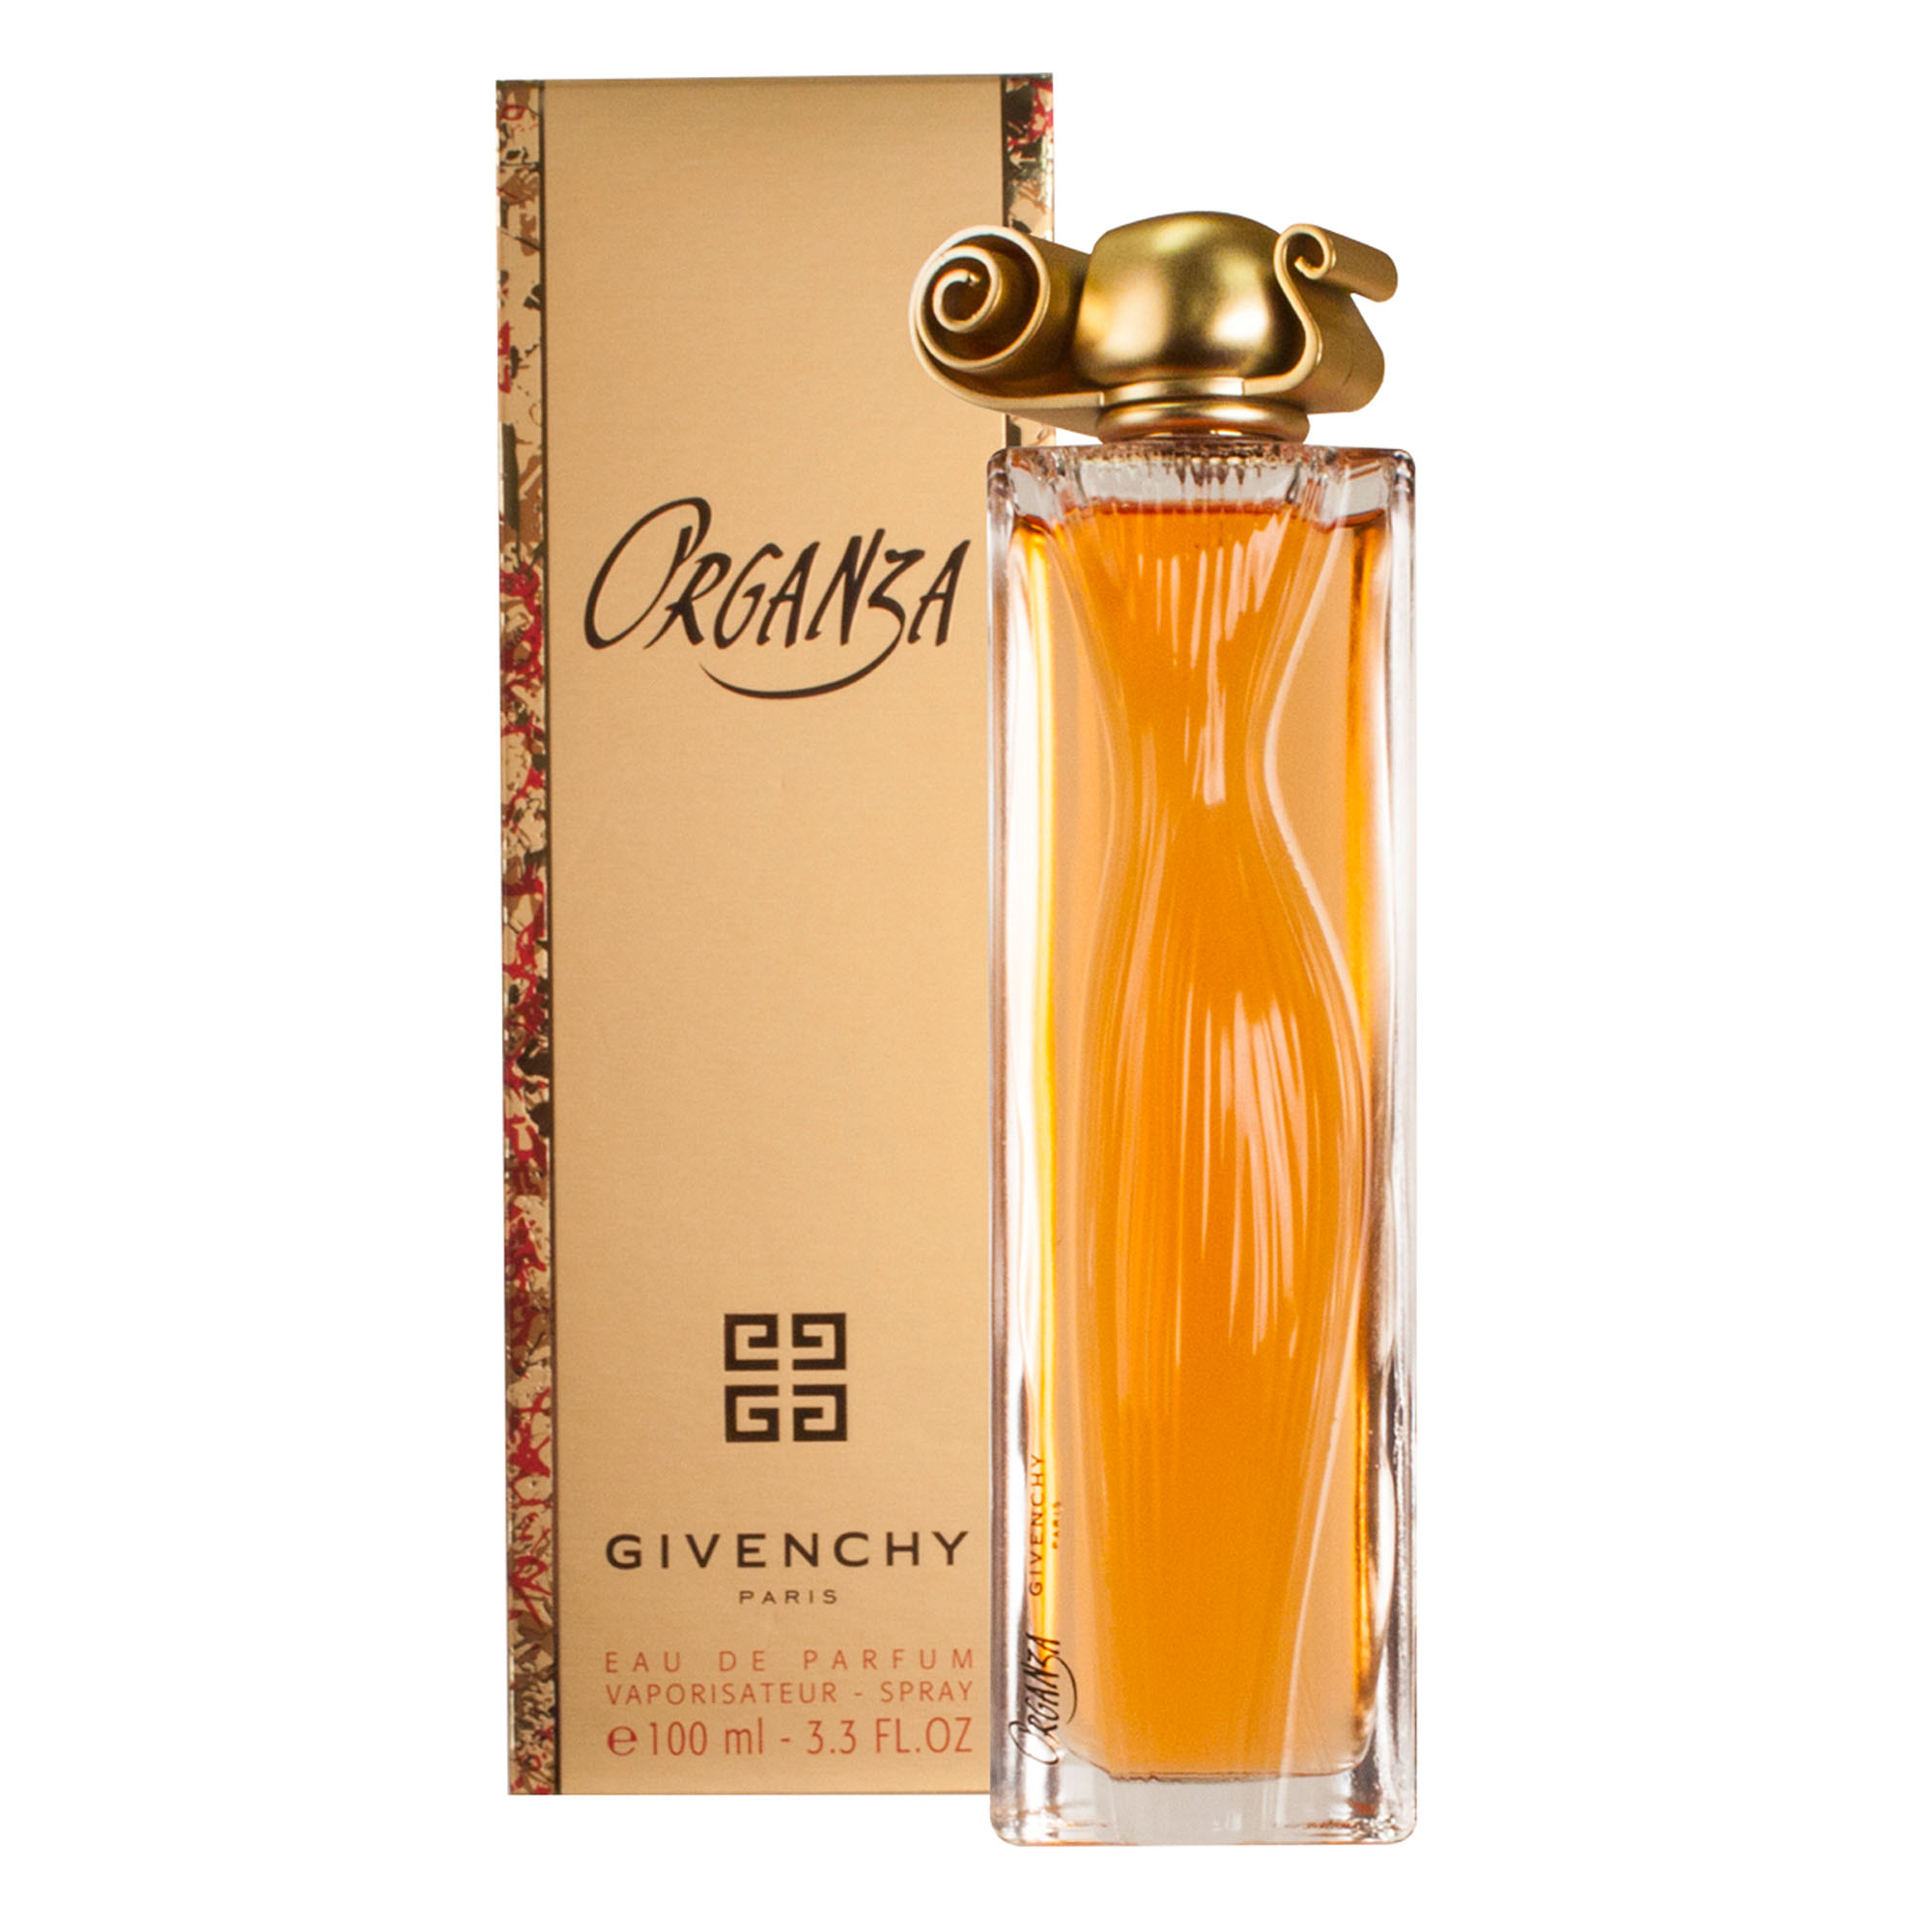 Givenchy Organza Eau de Parfum, Perfume for Women, 3.3 Oz - image 3 of 3